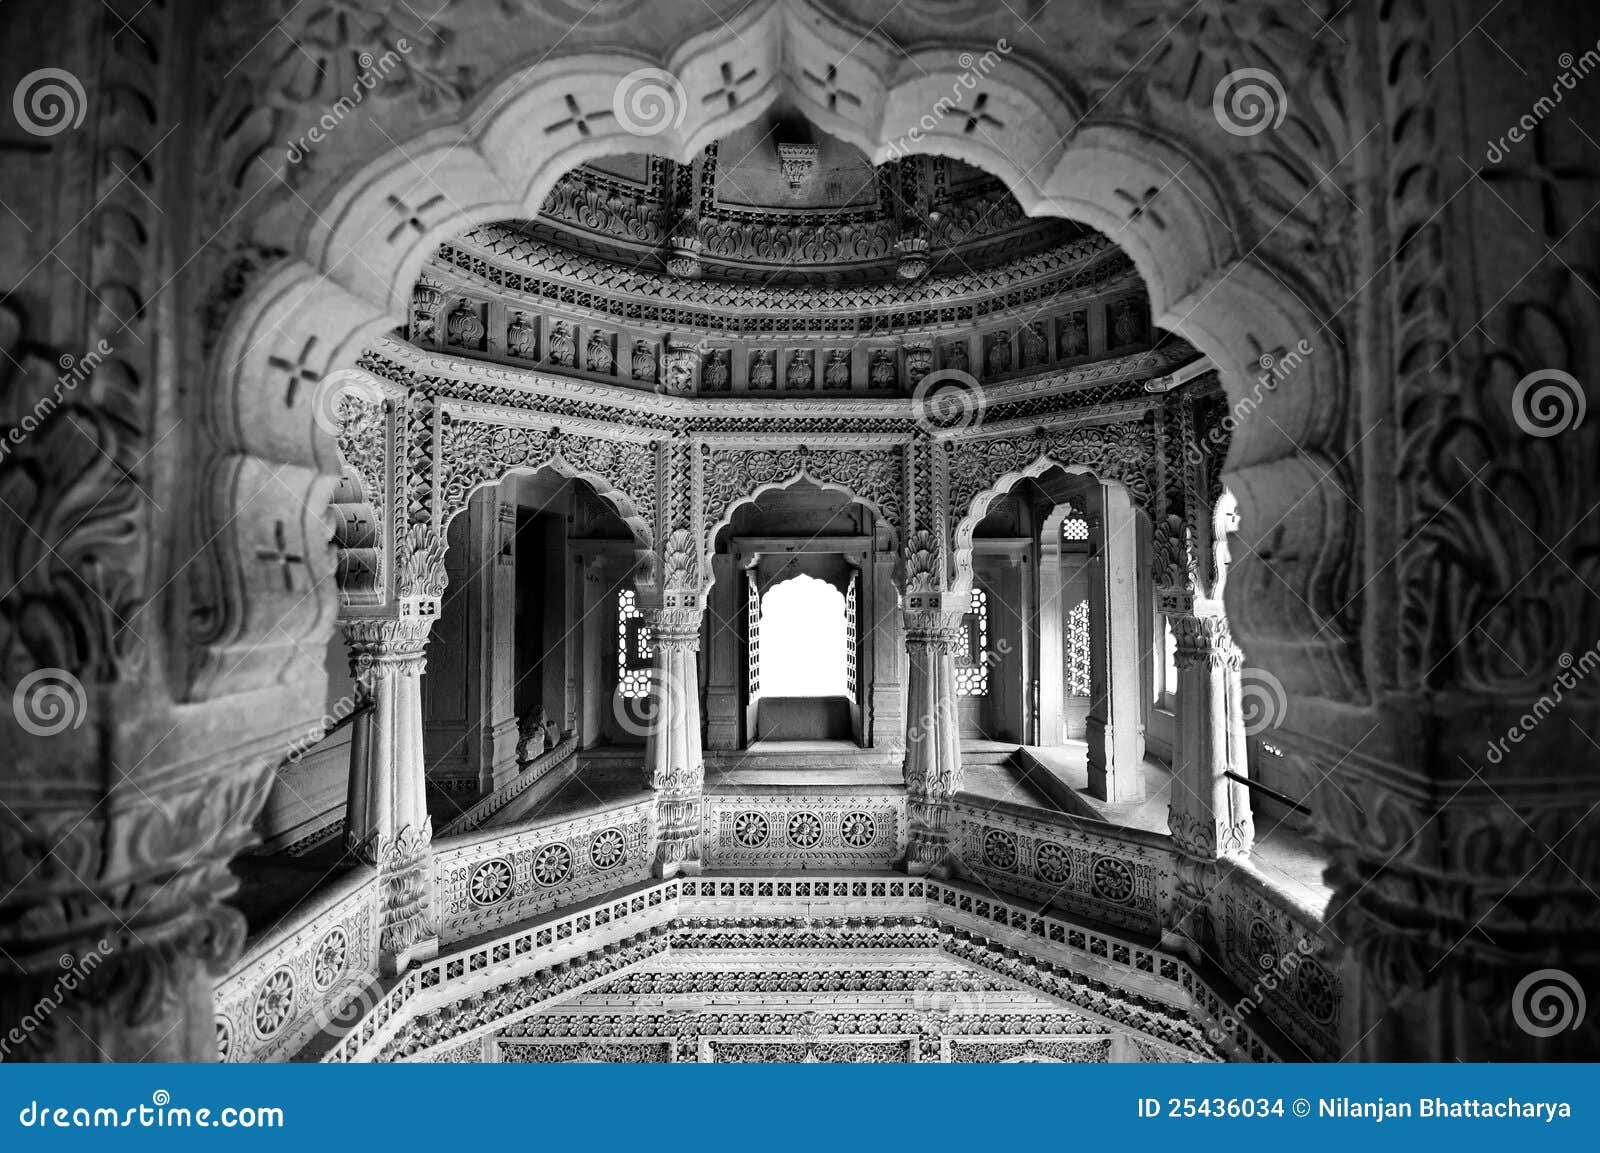 Jain Temple Architecture